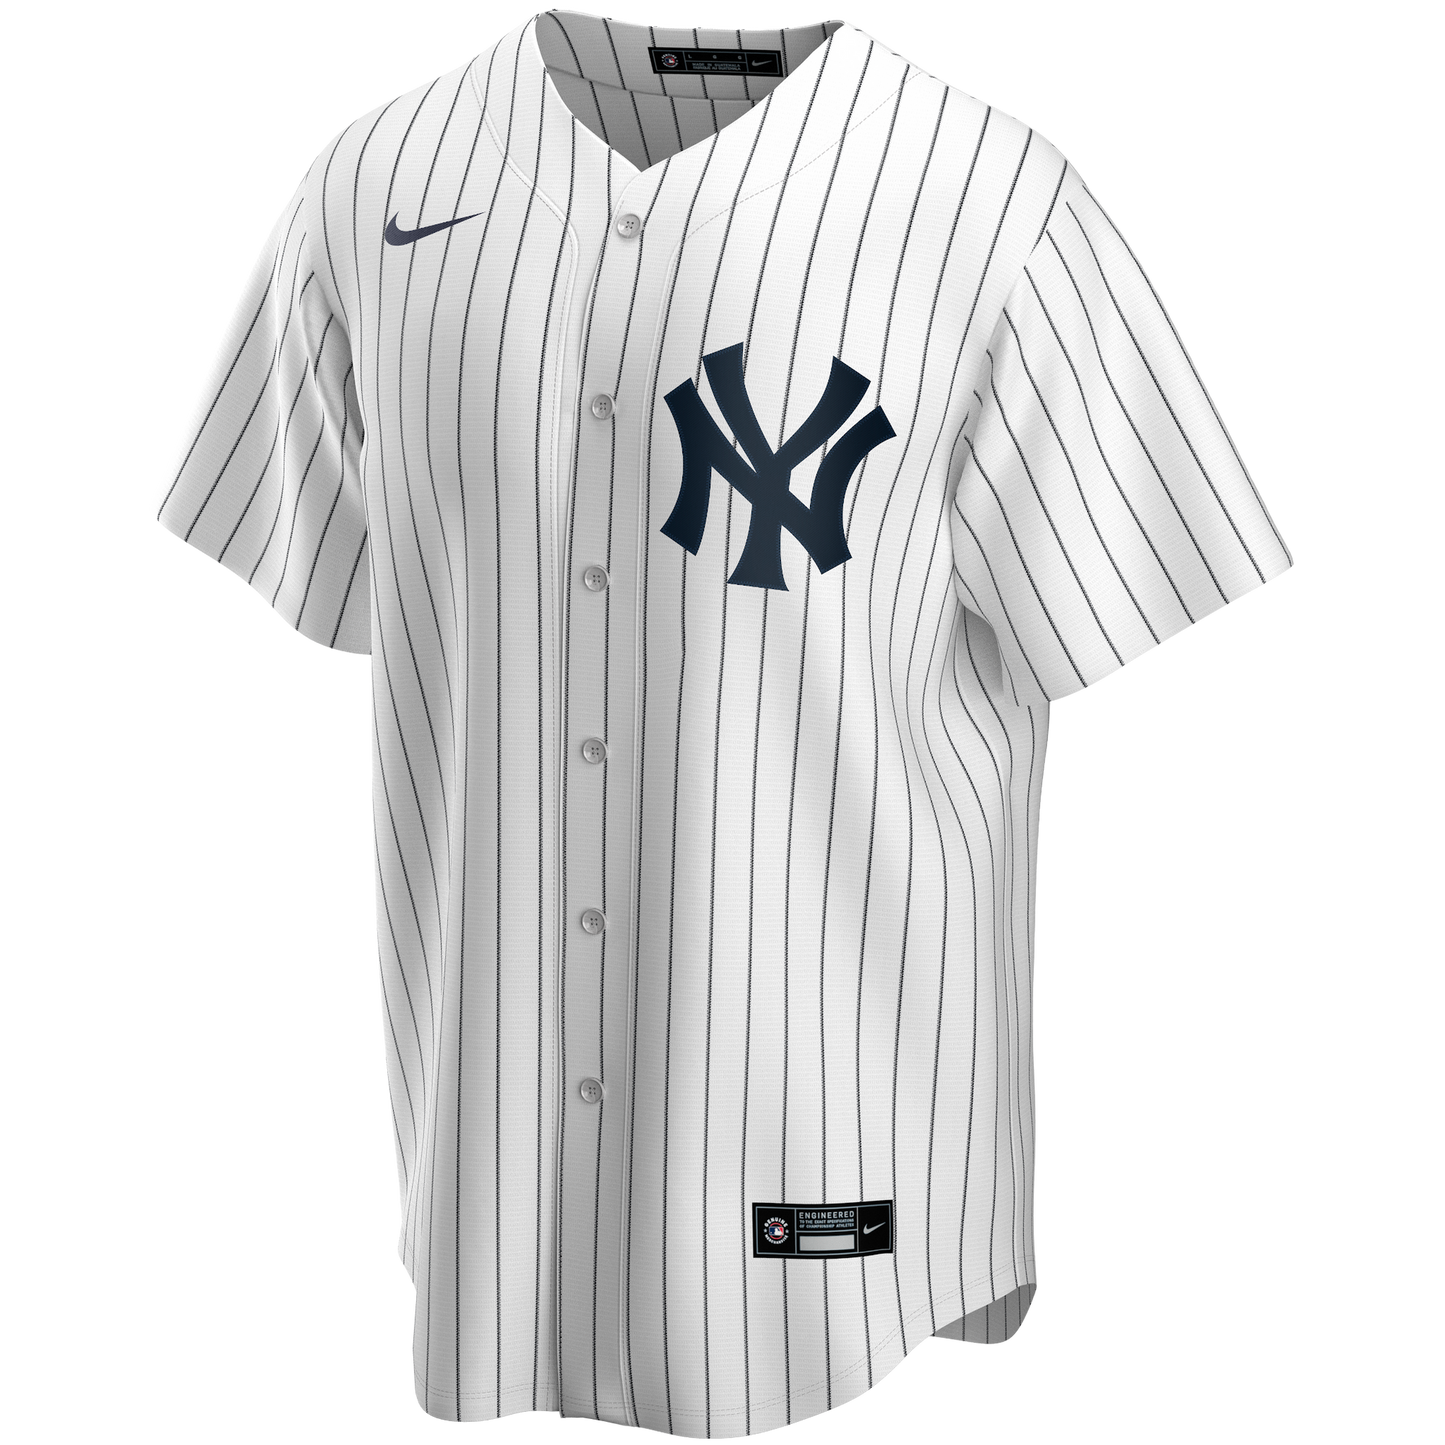 Men's Nike Jorge Posada White New York Yankees Home Official Replica Player Jersey